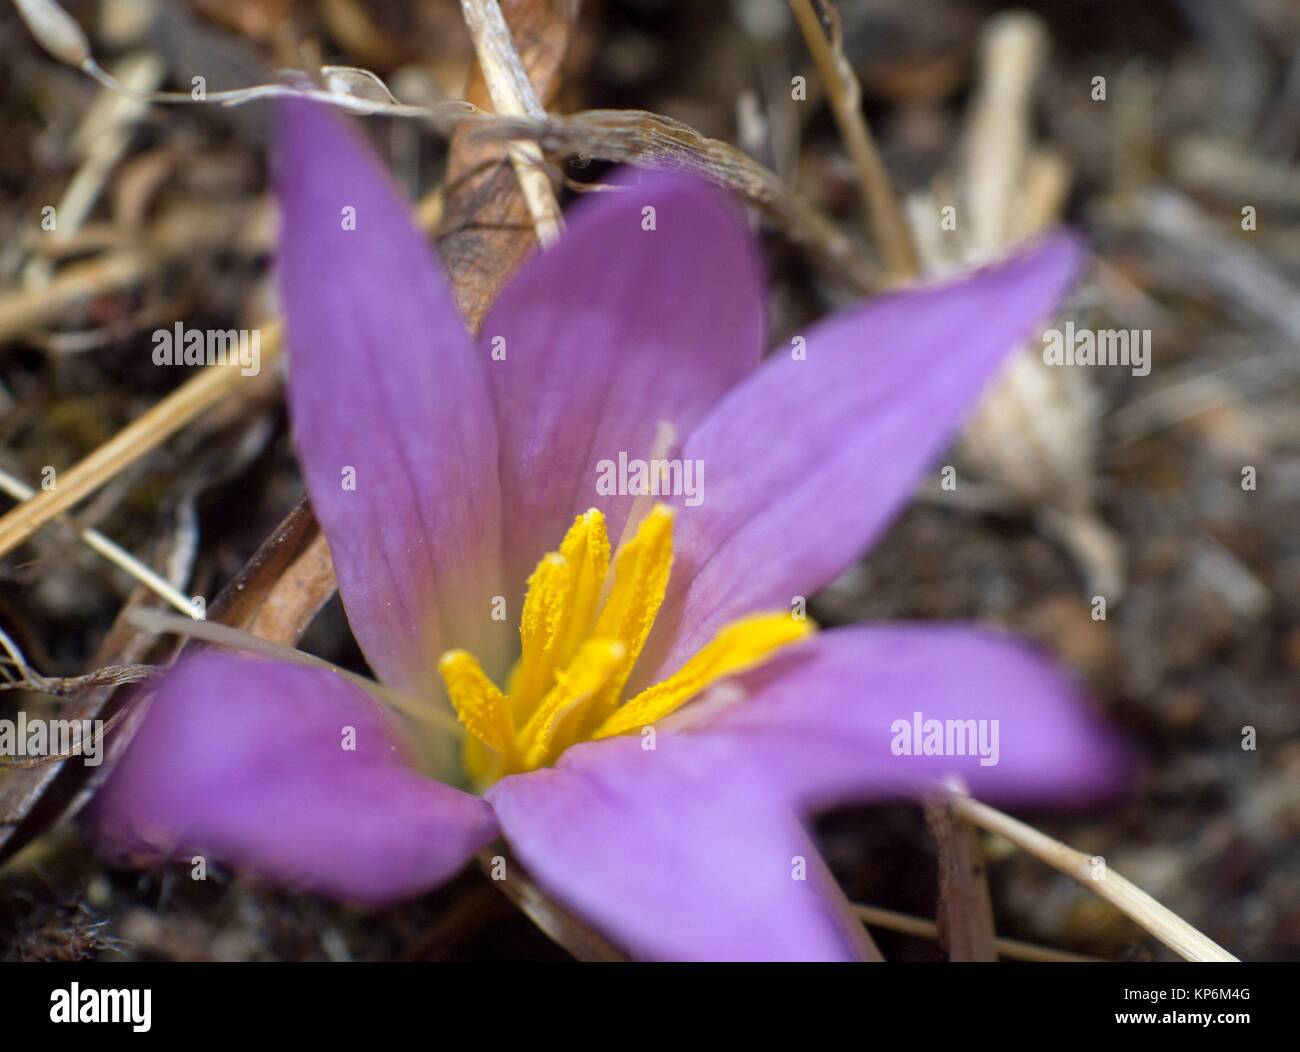 Purple flower with yellow stamens Stock Photo